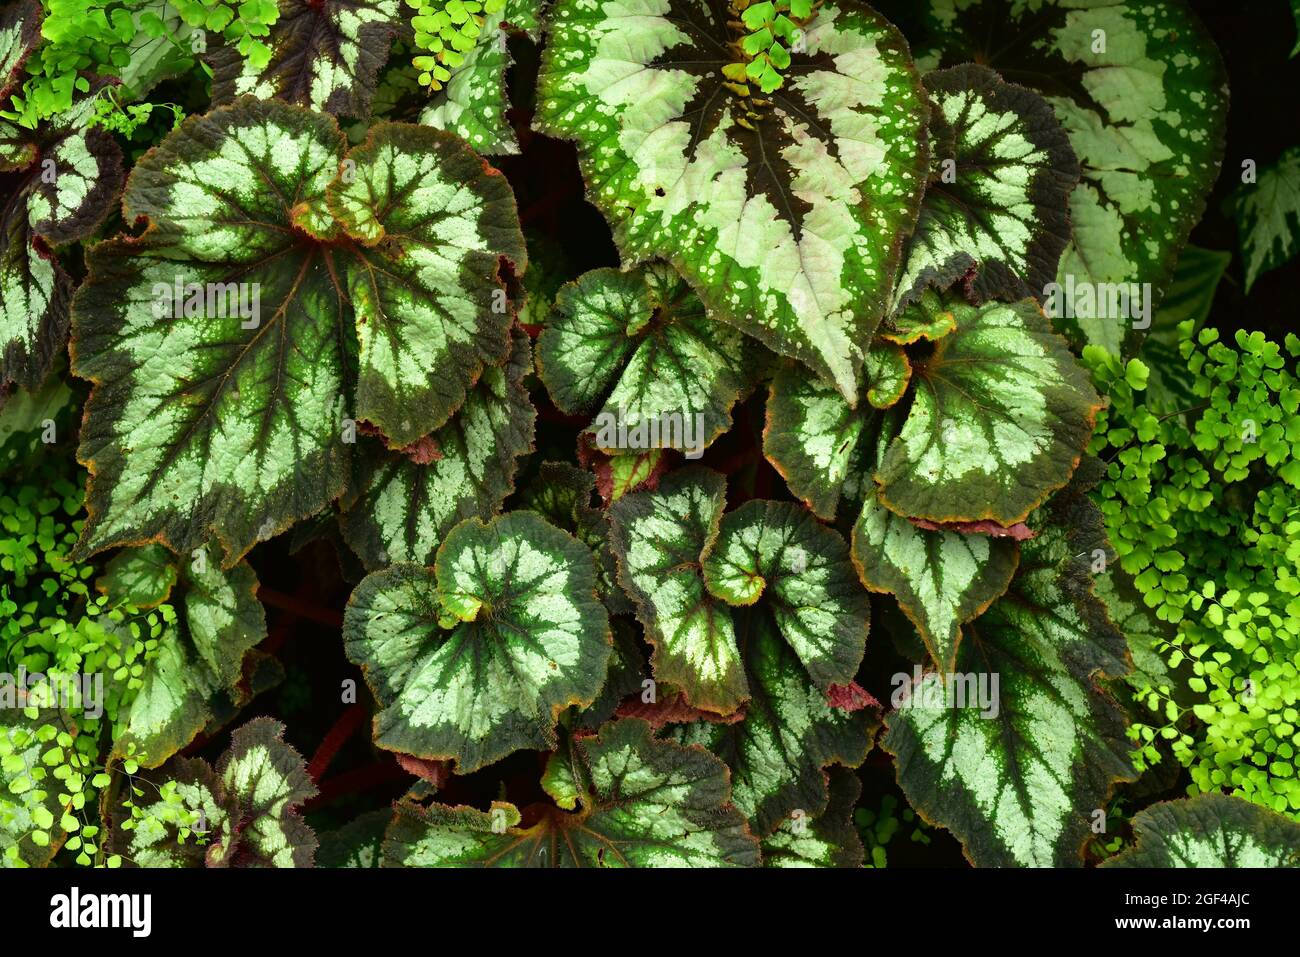 Begonia rex Scargot is an ornamental perennial plant native to tropical Asia. Stock Photo